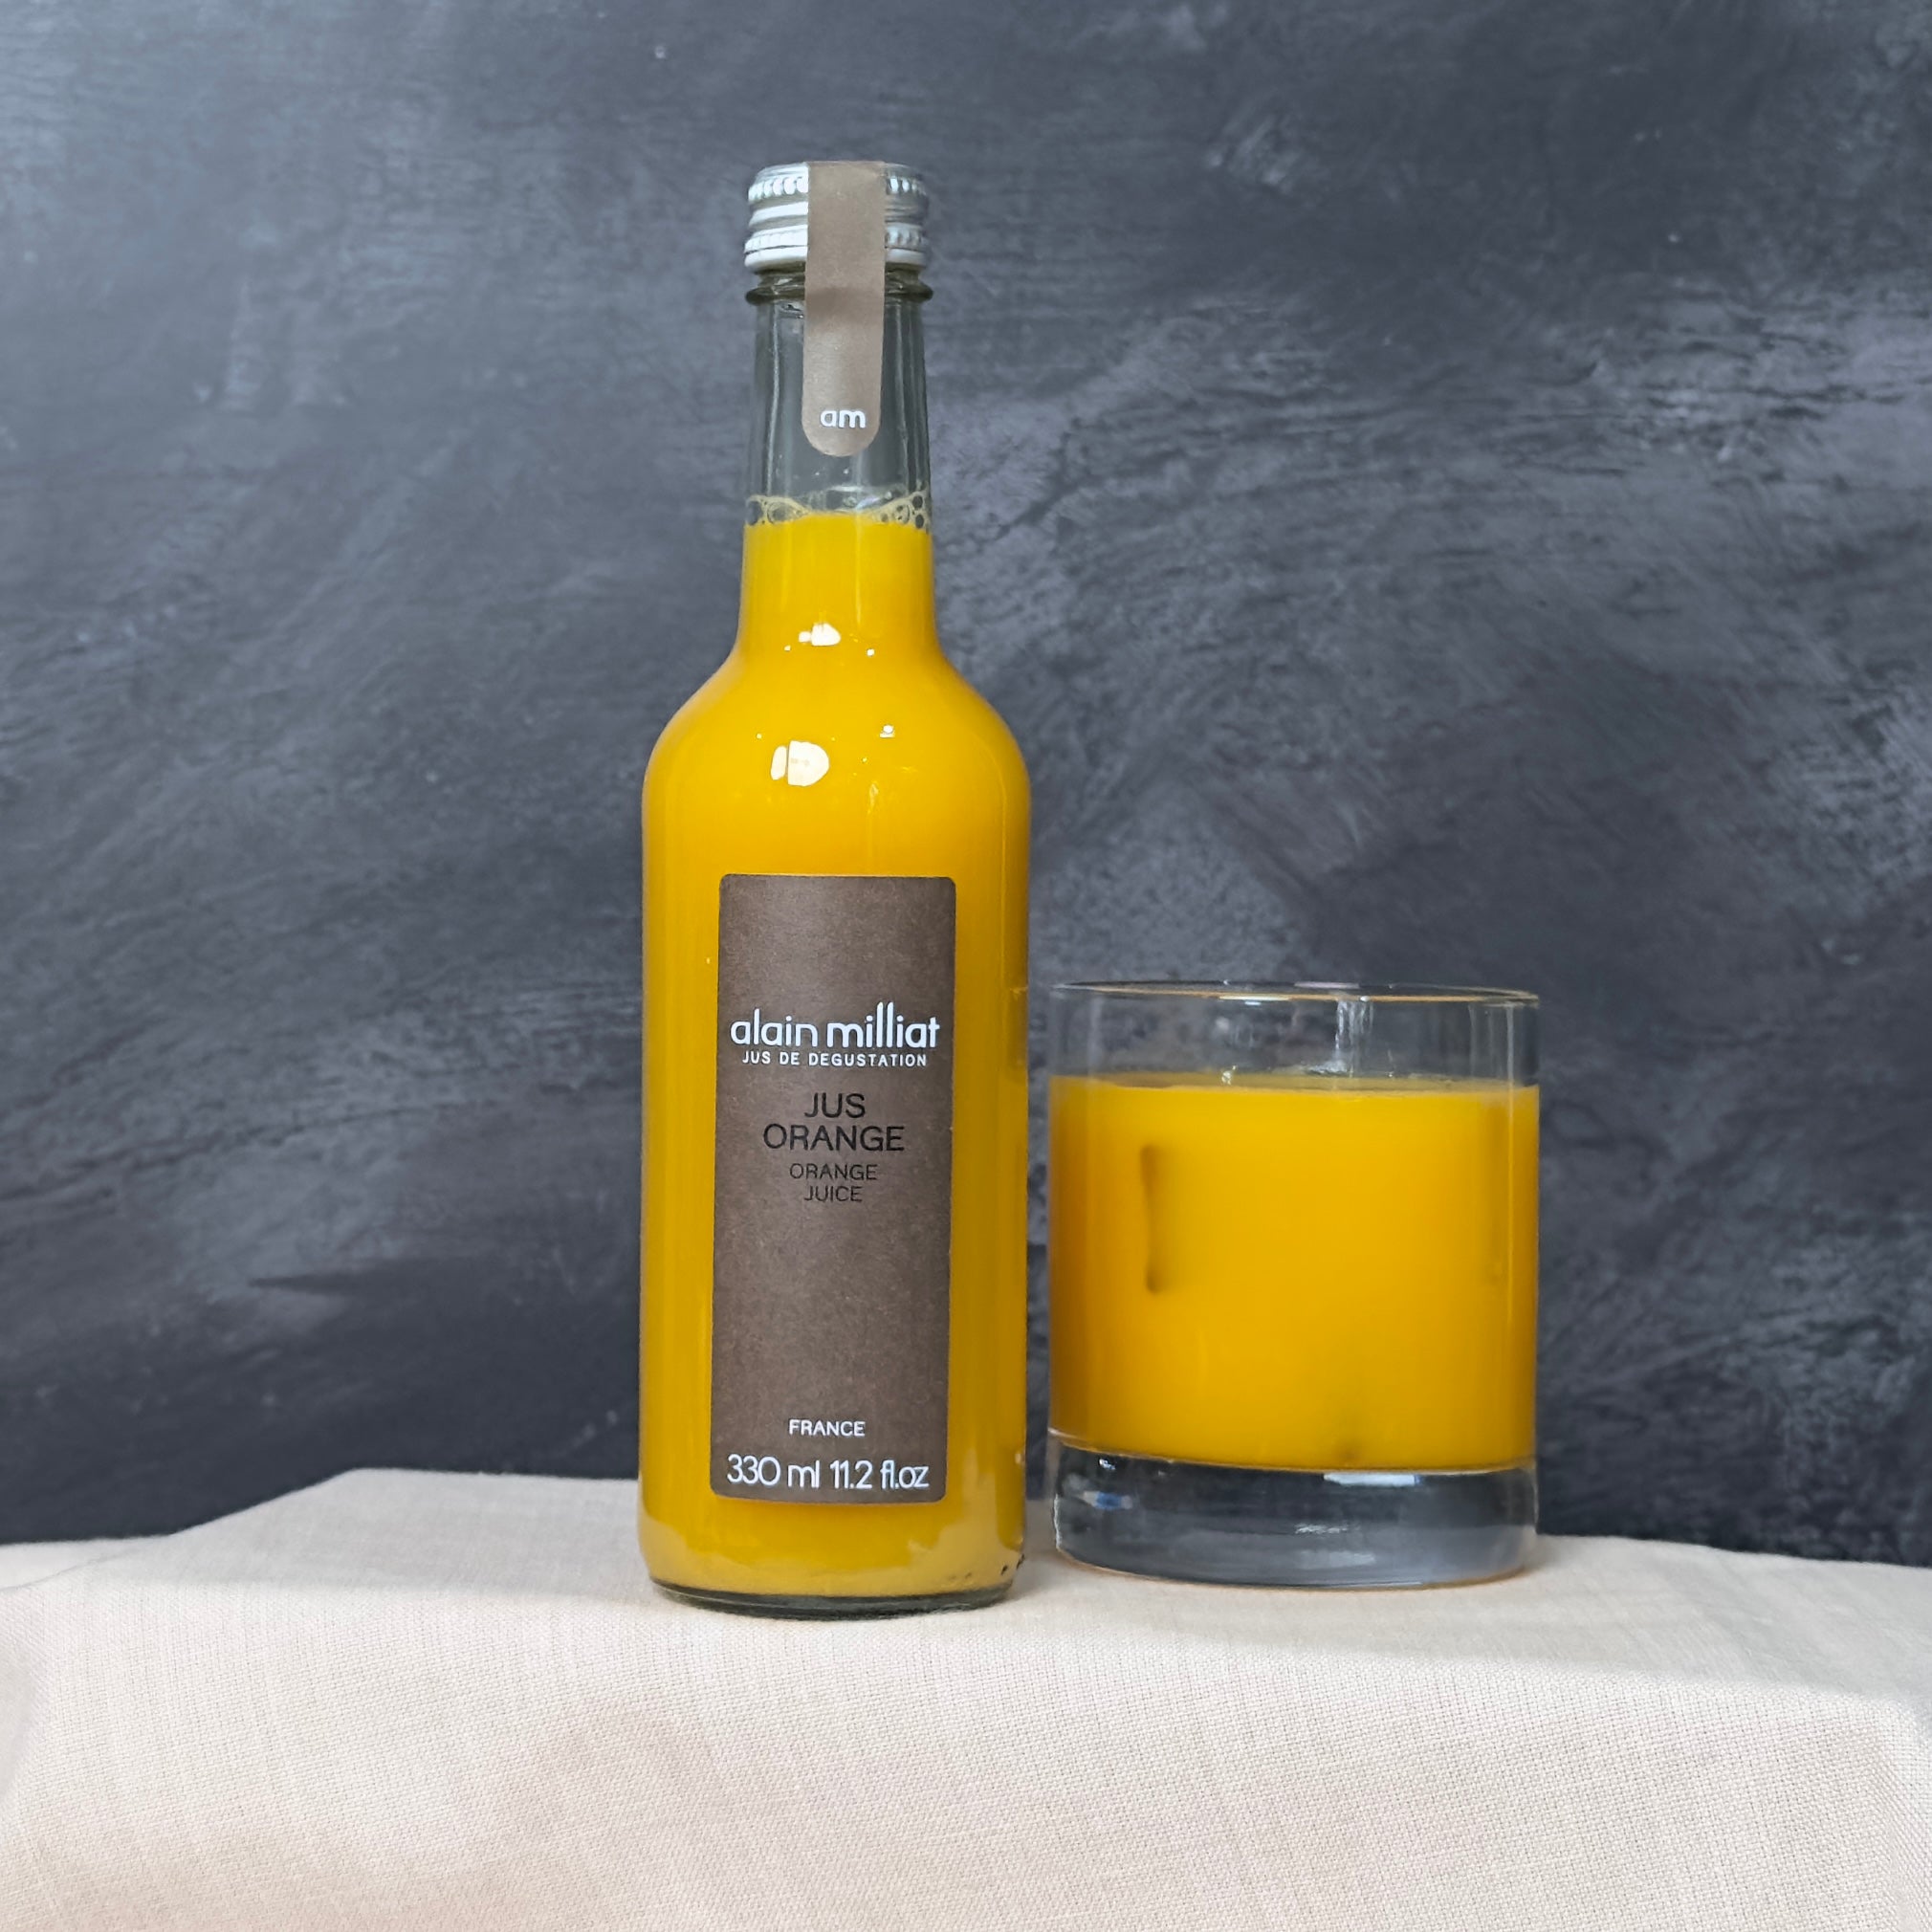 Alain Milliat Orange Juice